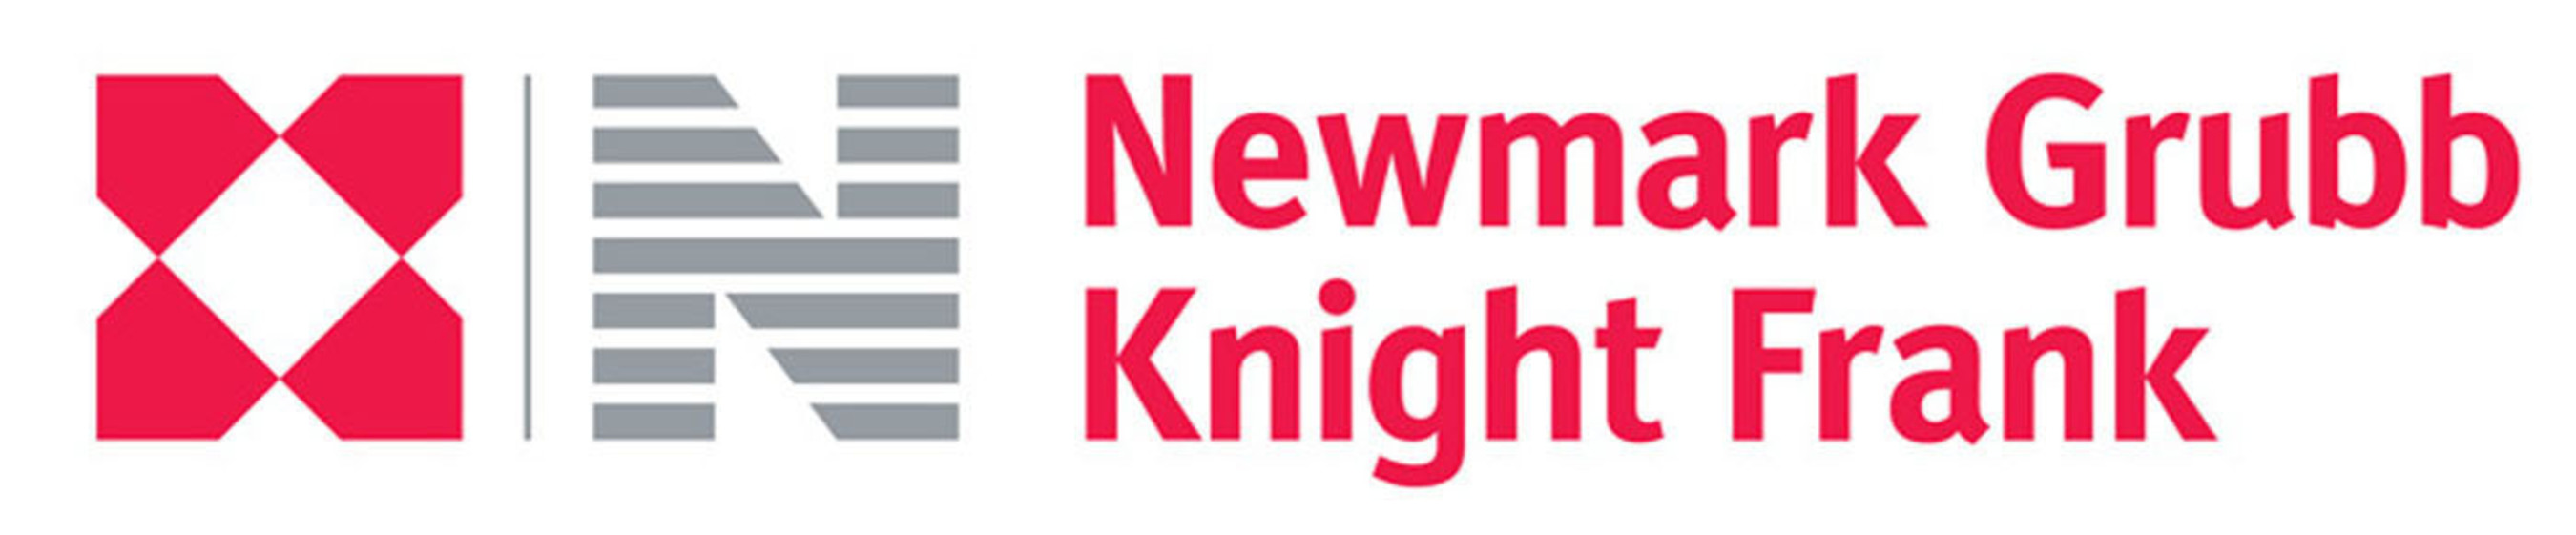 Newmark Grubb Knight Frank logo.